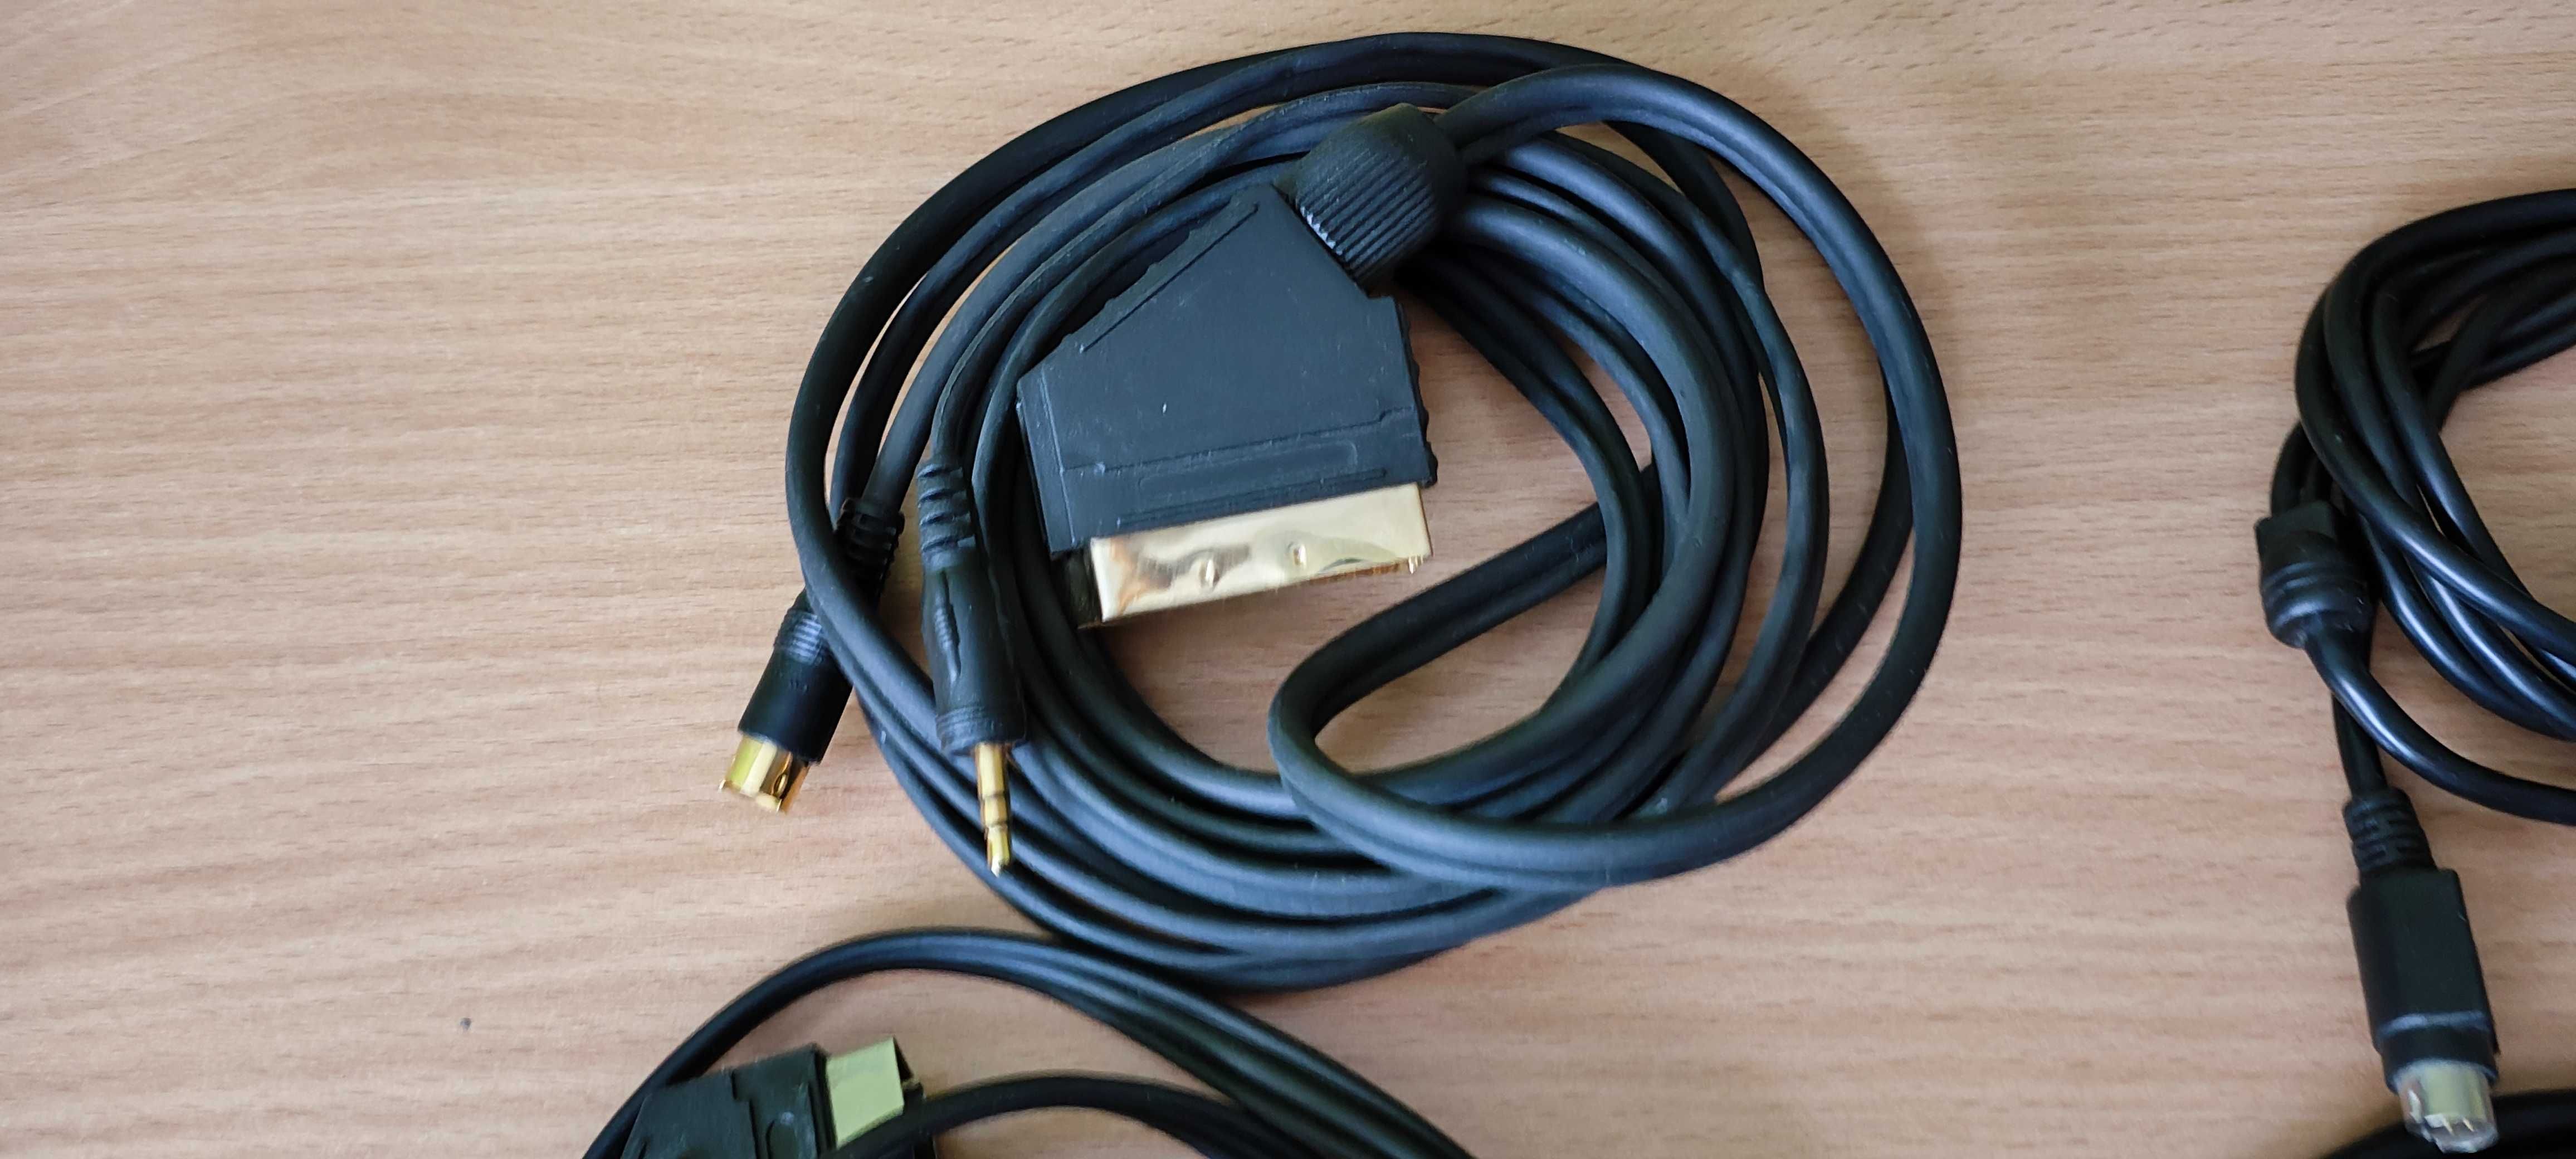 Kabel komputerowy vga / kabel s-video + inne